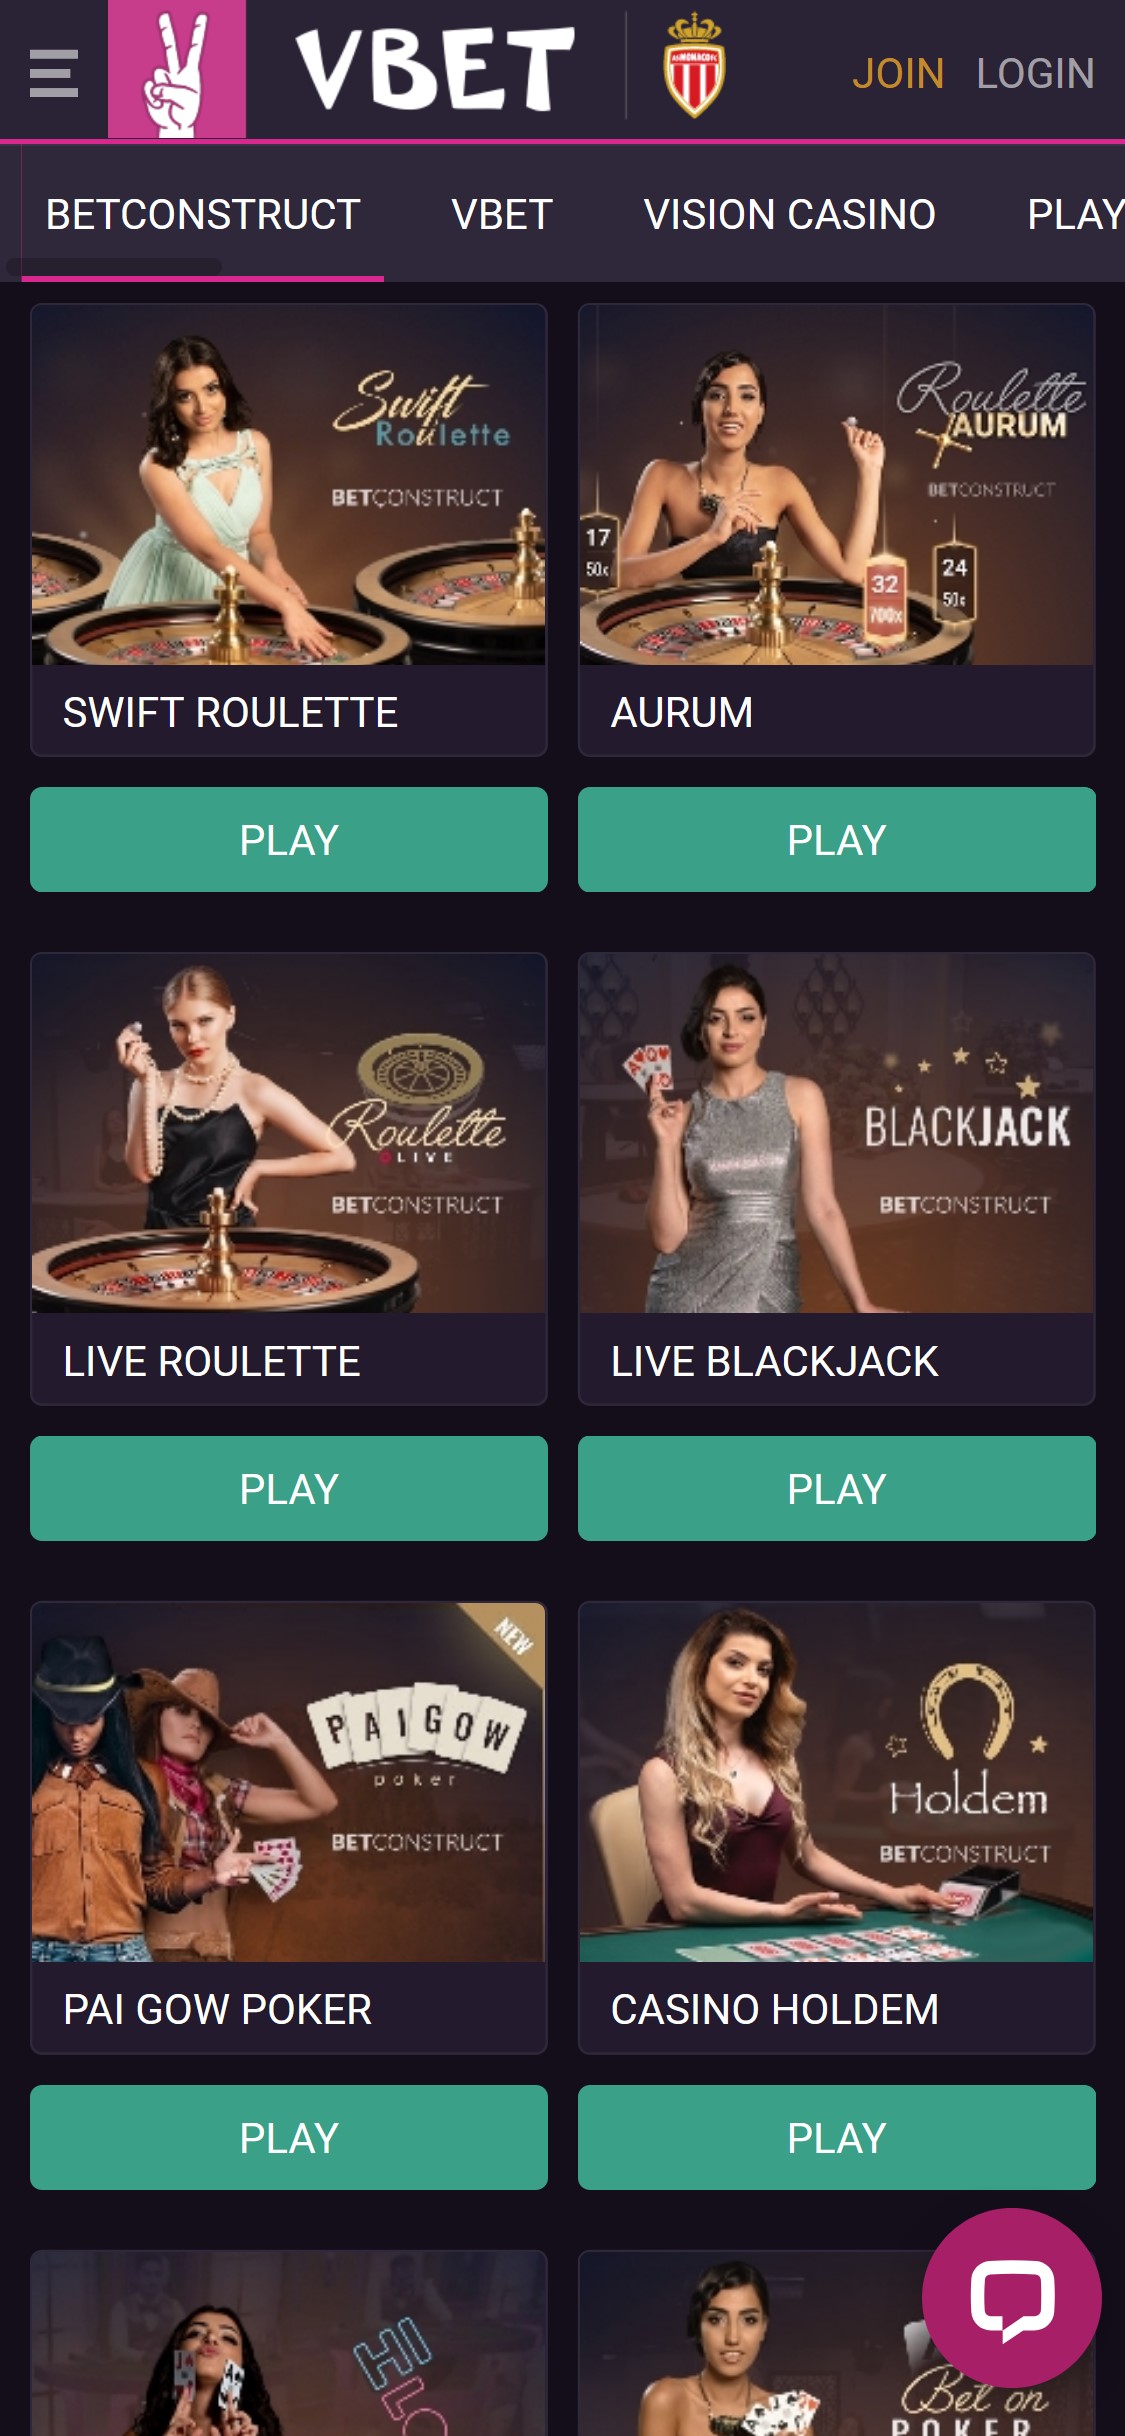 Vbet Casino Mobile Live Dealer Games Review